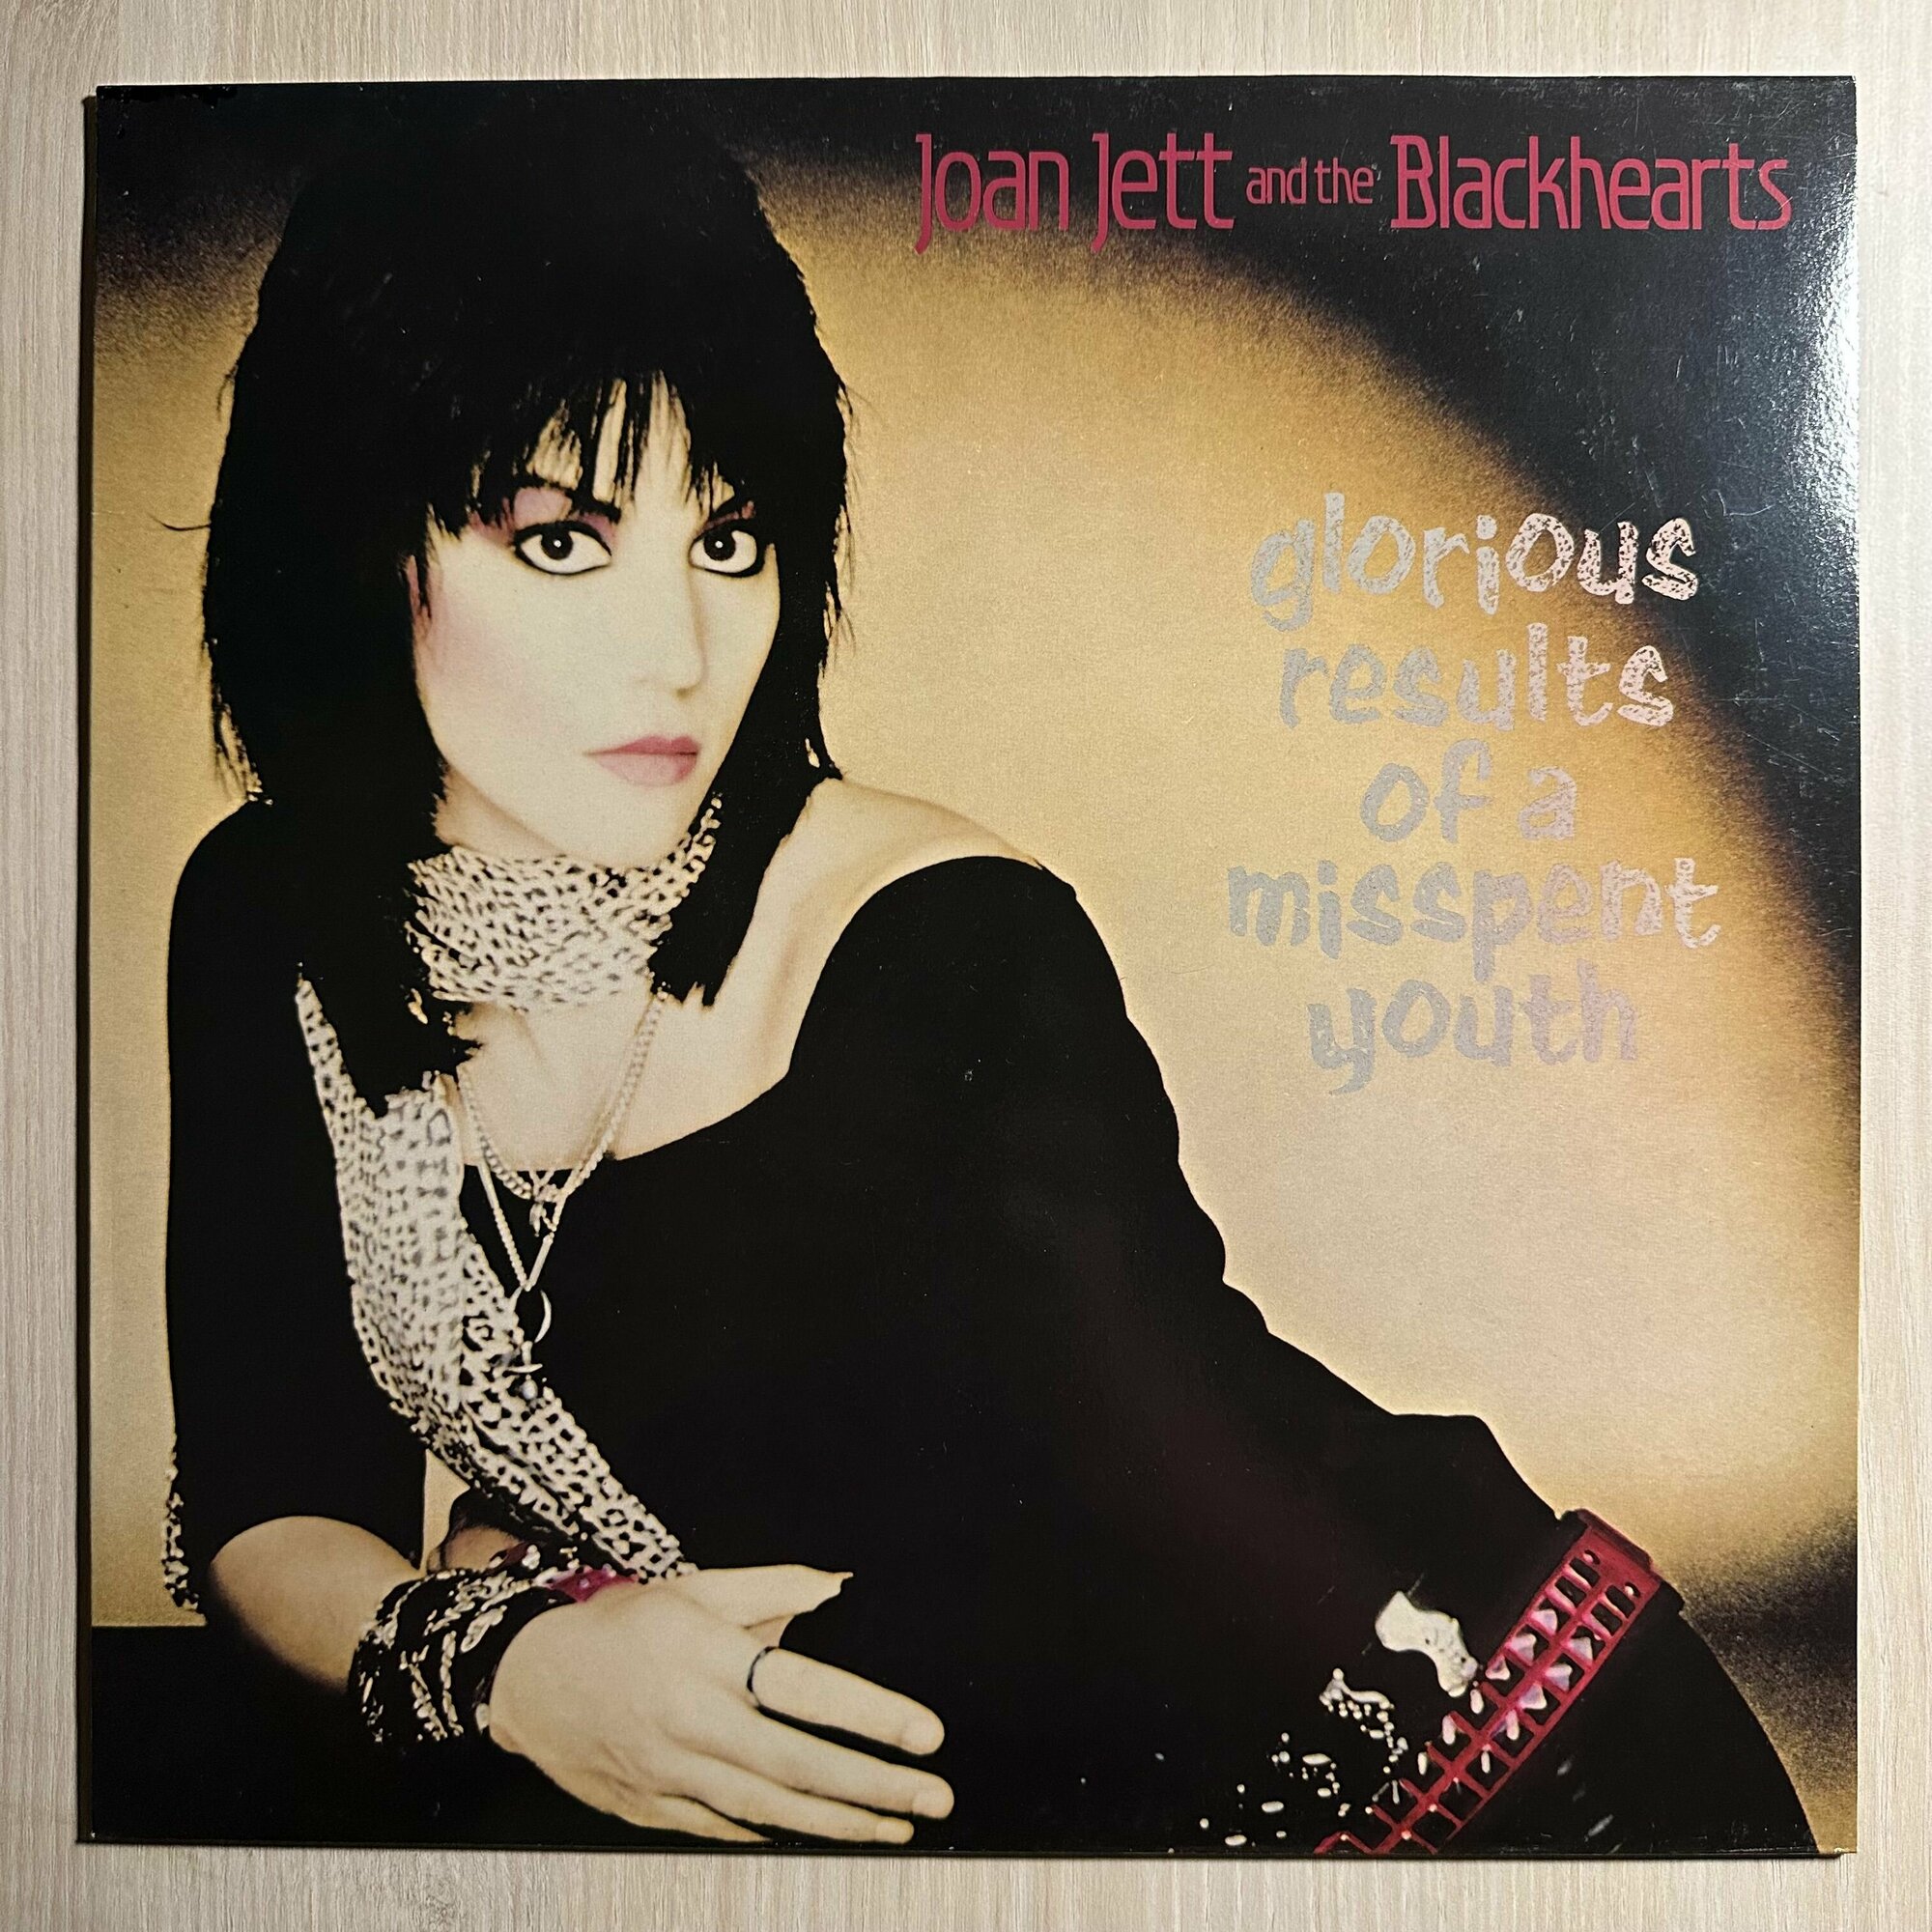 Виниловая пластинка Joan Jett And The Blackhearts Glorious Results Of A Misspent Youth (Голландия 1984г.)